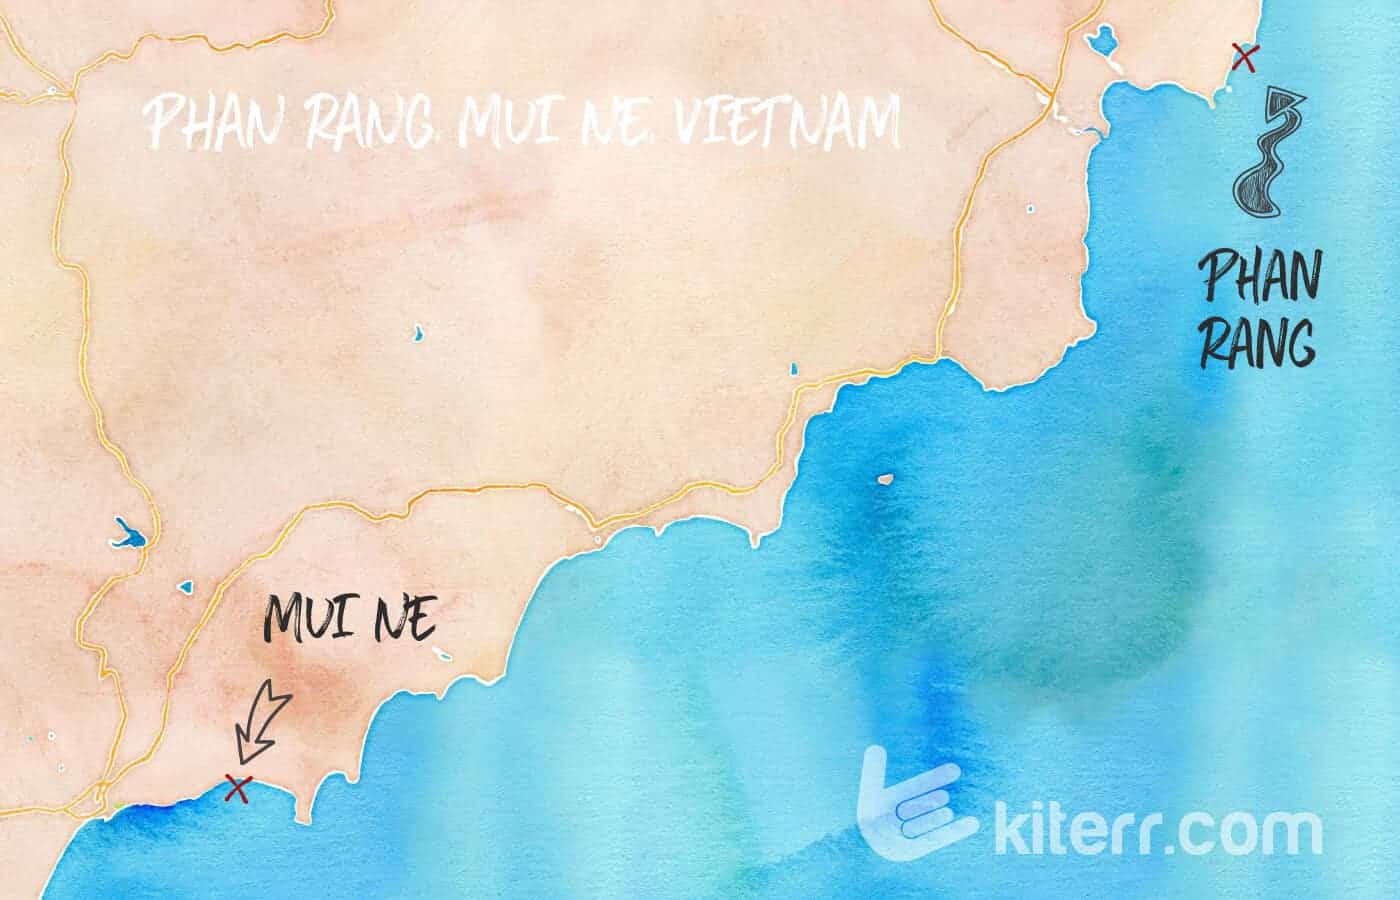 The best kitespots in Mui Ne - Phan Rang, Vietnam // Kiterr.com